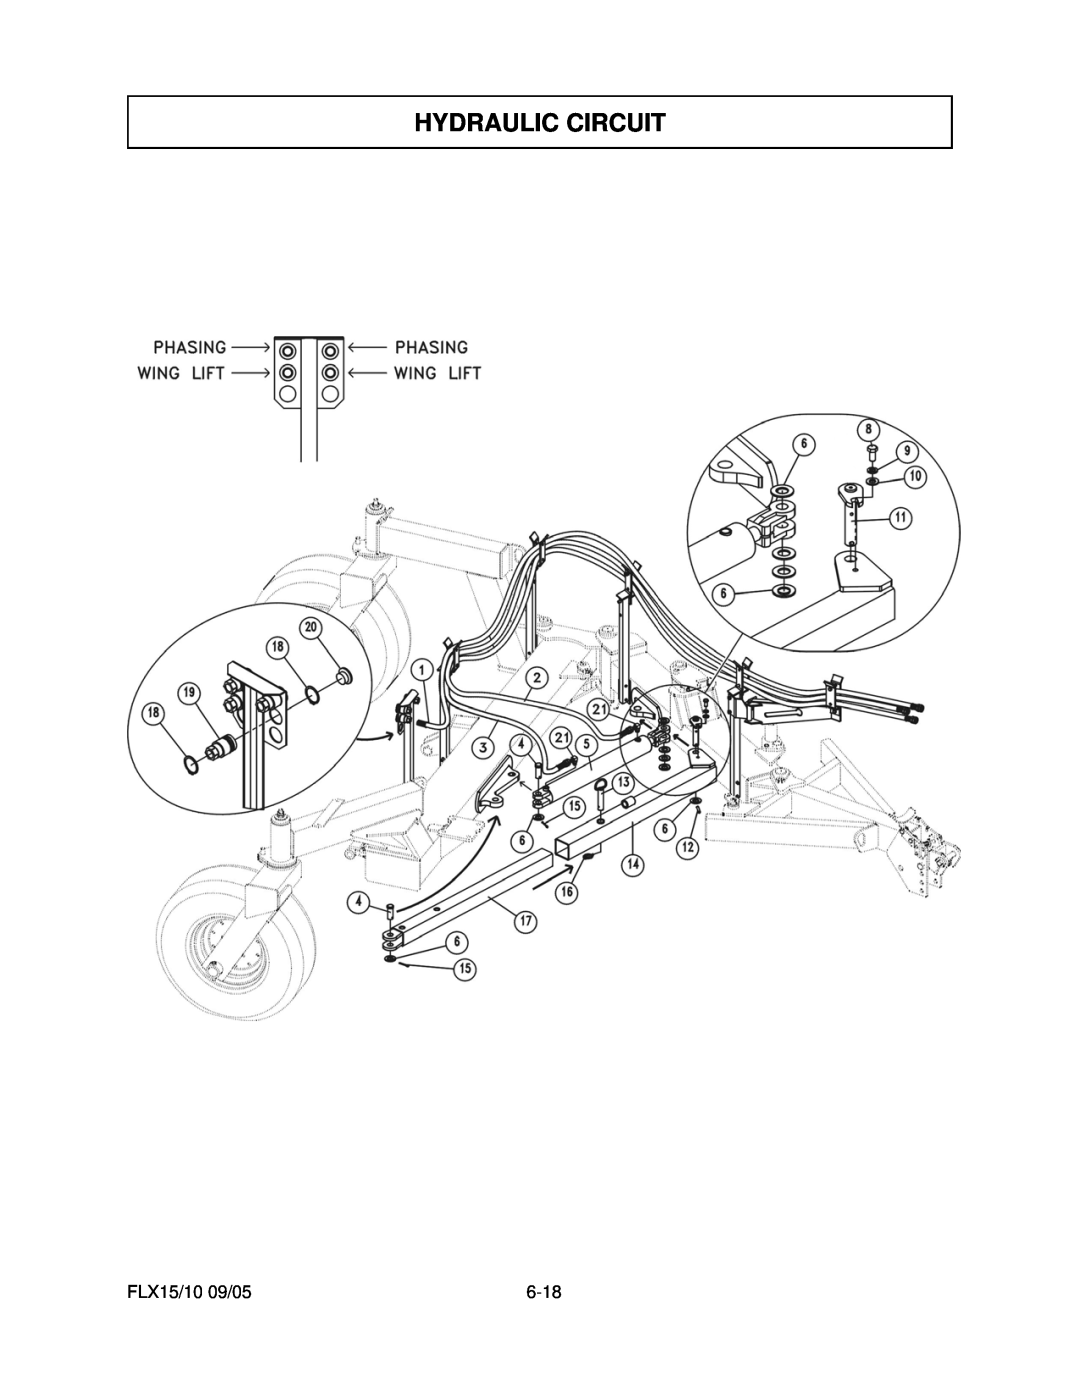 Tiger Mowers FLX10 manual Hydraulic Circuit, FLX15/10 09/05, 6-18 